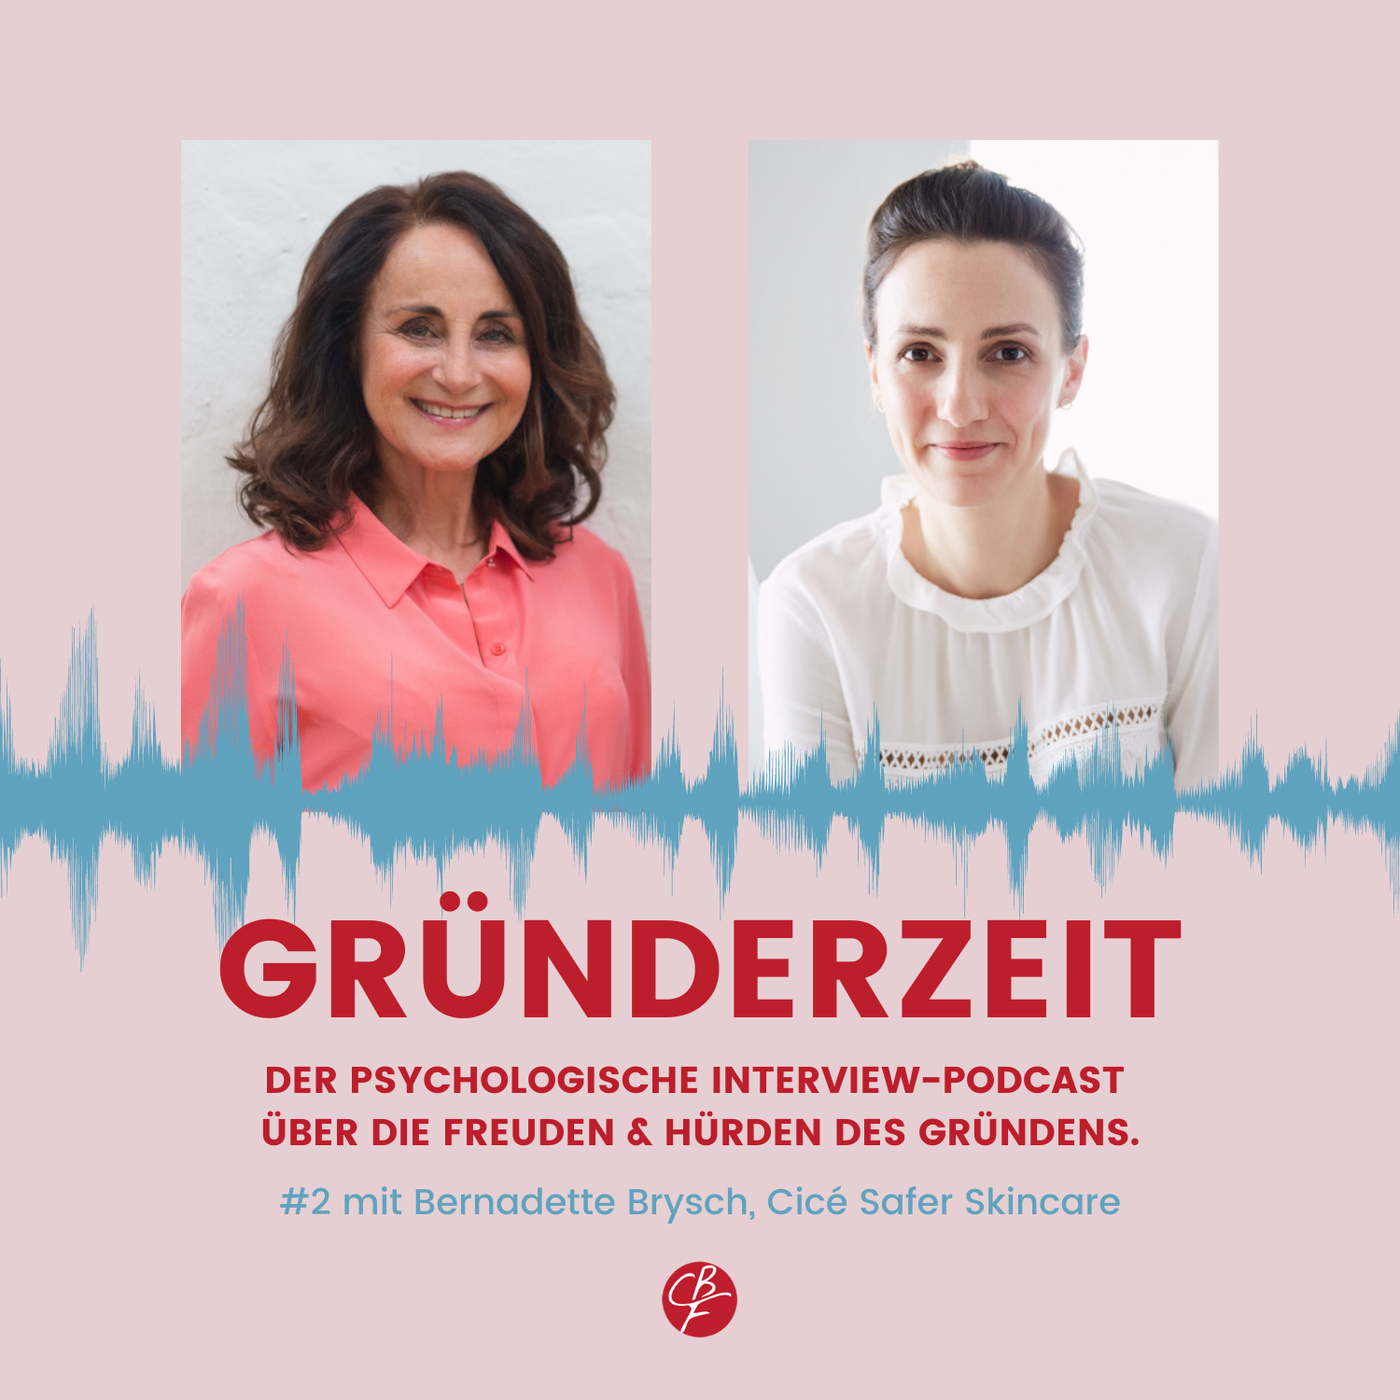 Folge 4, Zweiter Teil Interview mit Bernadette Brysch, Cicé Safer Skincare